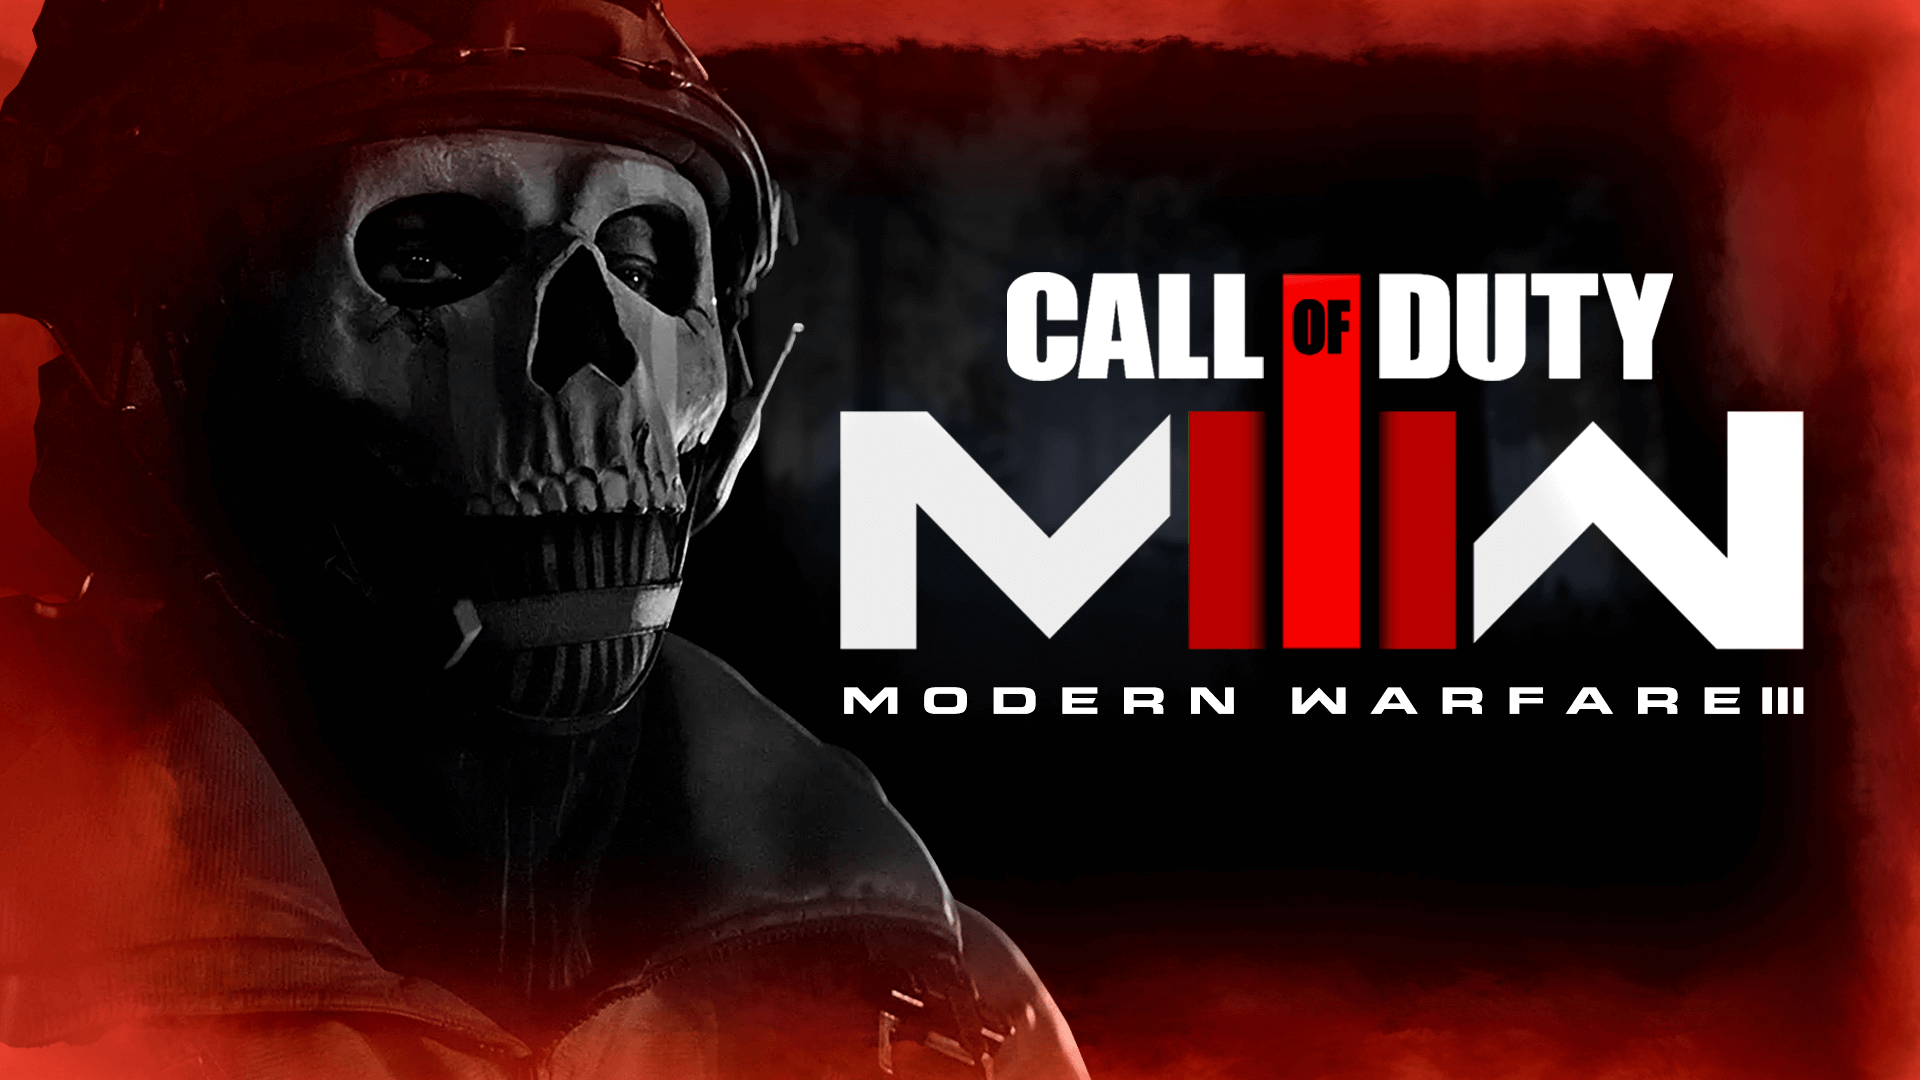 Call of Duty: Modern Warfare 3 preorder bonuses and deals